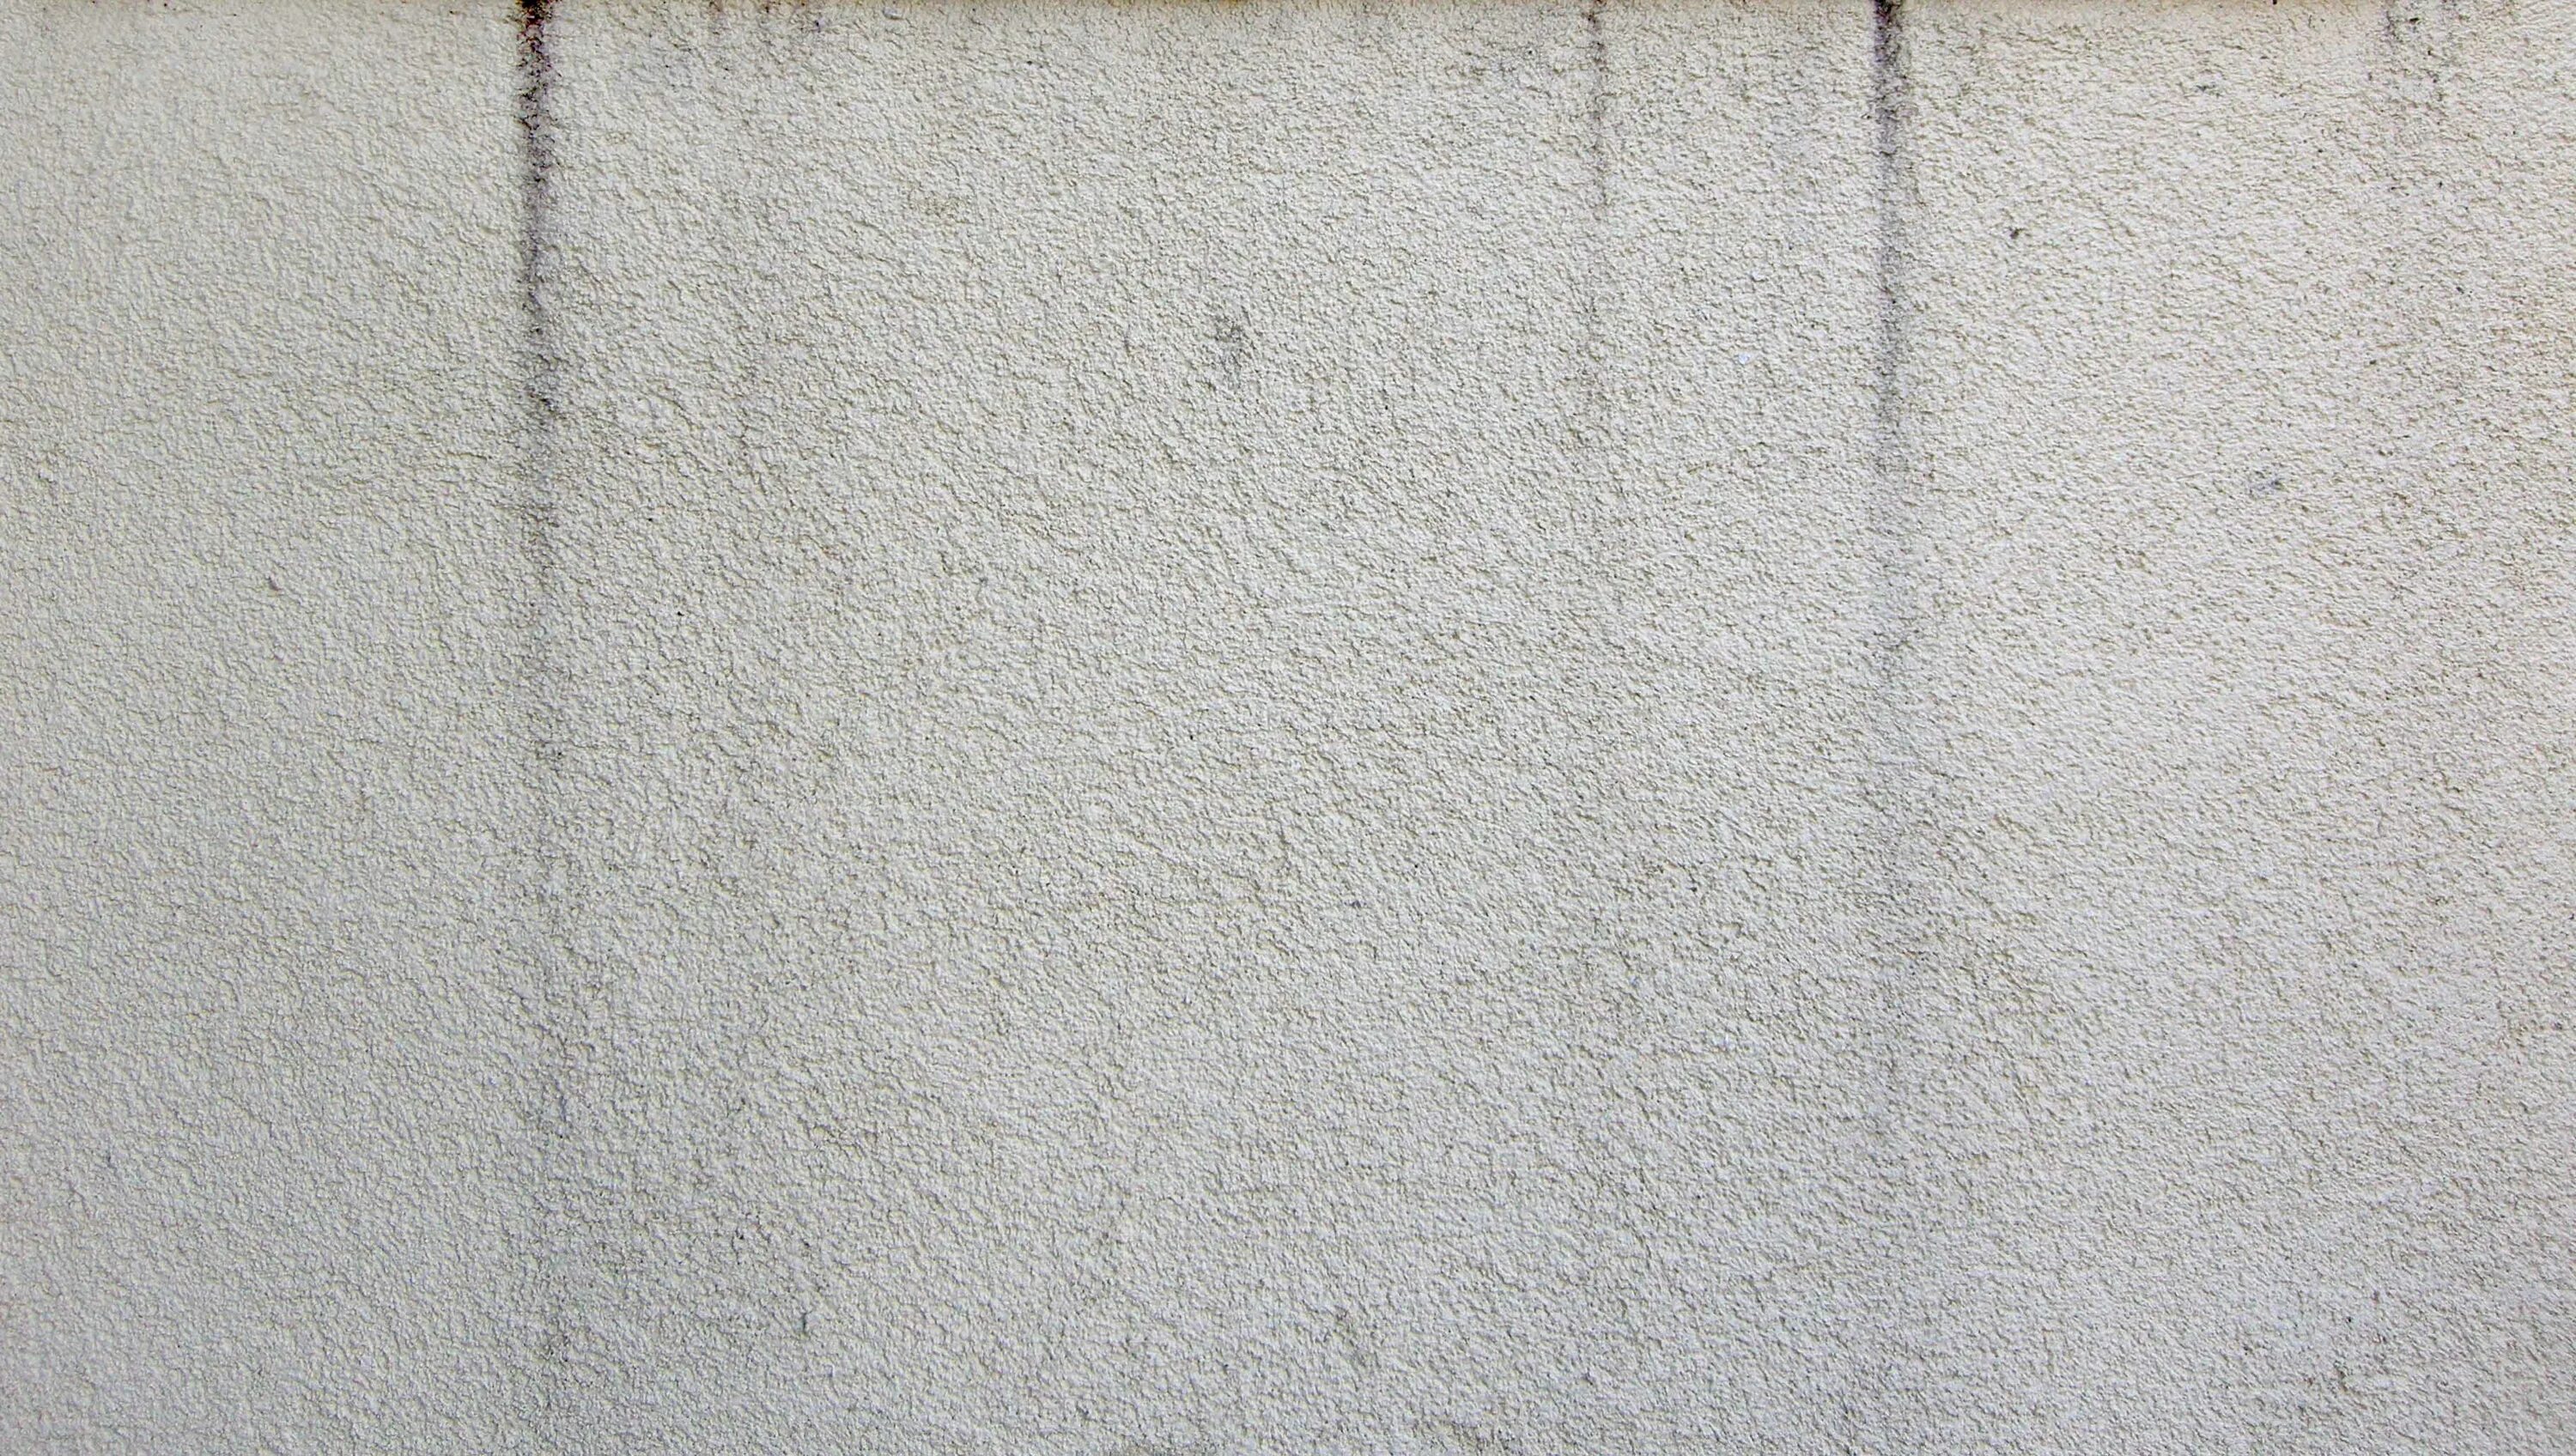 White concrete. Цементная стена. Бетонная стена. Текстура бетона. Цемент текстура.